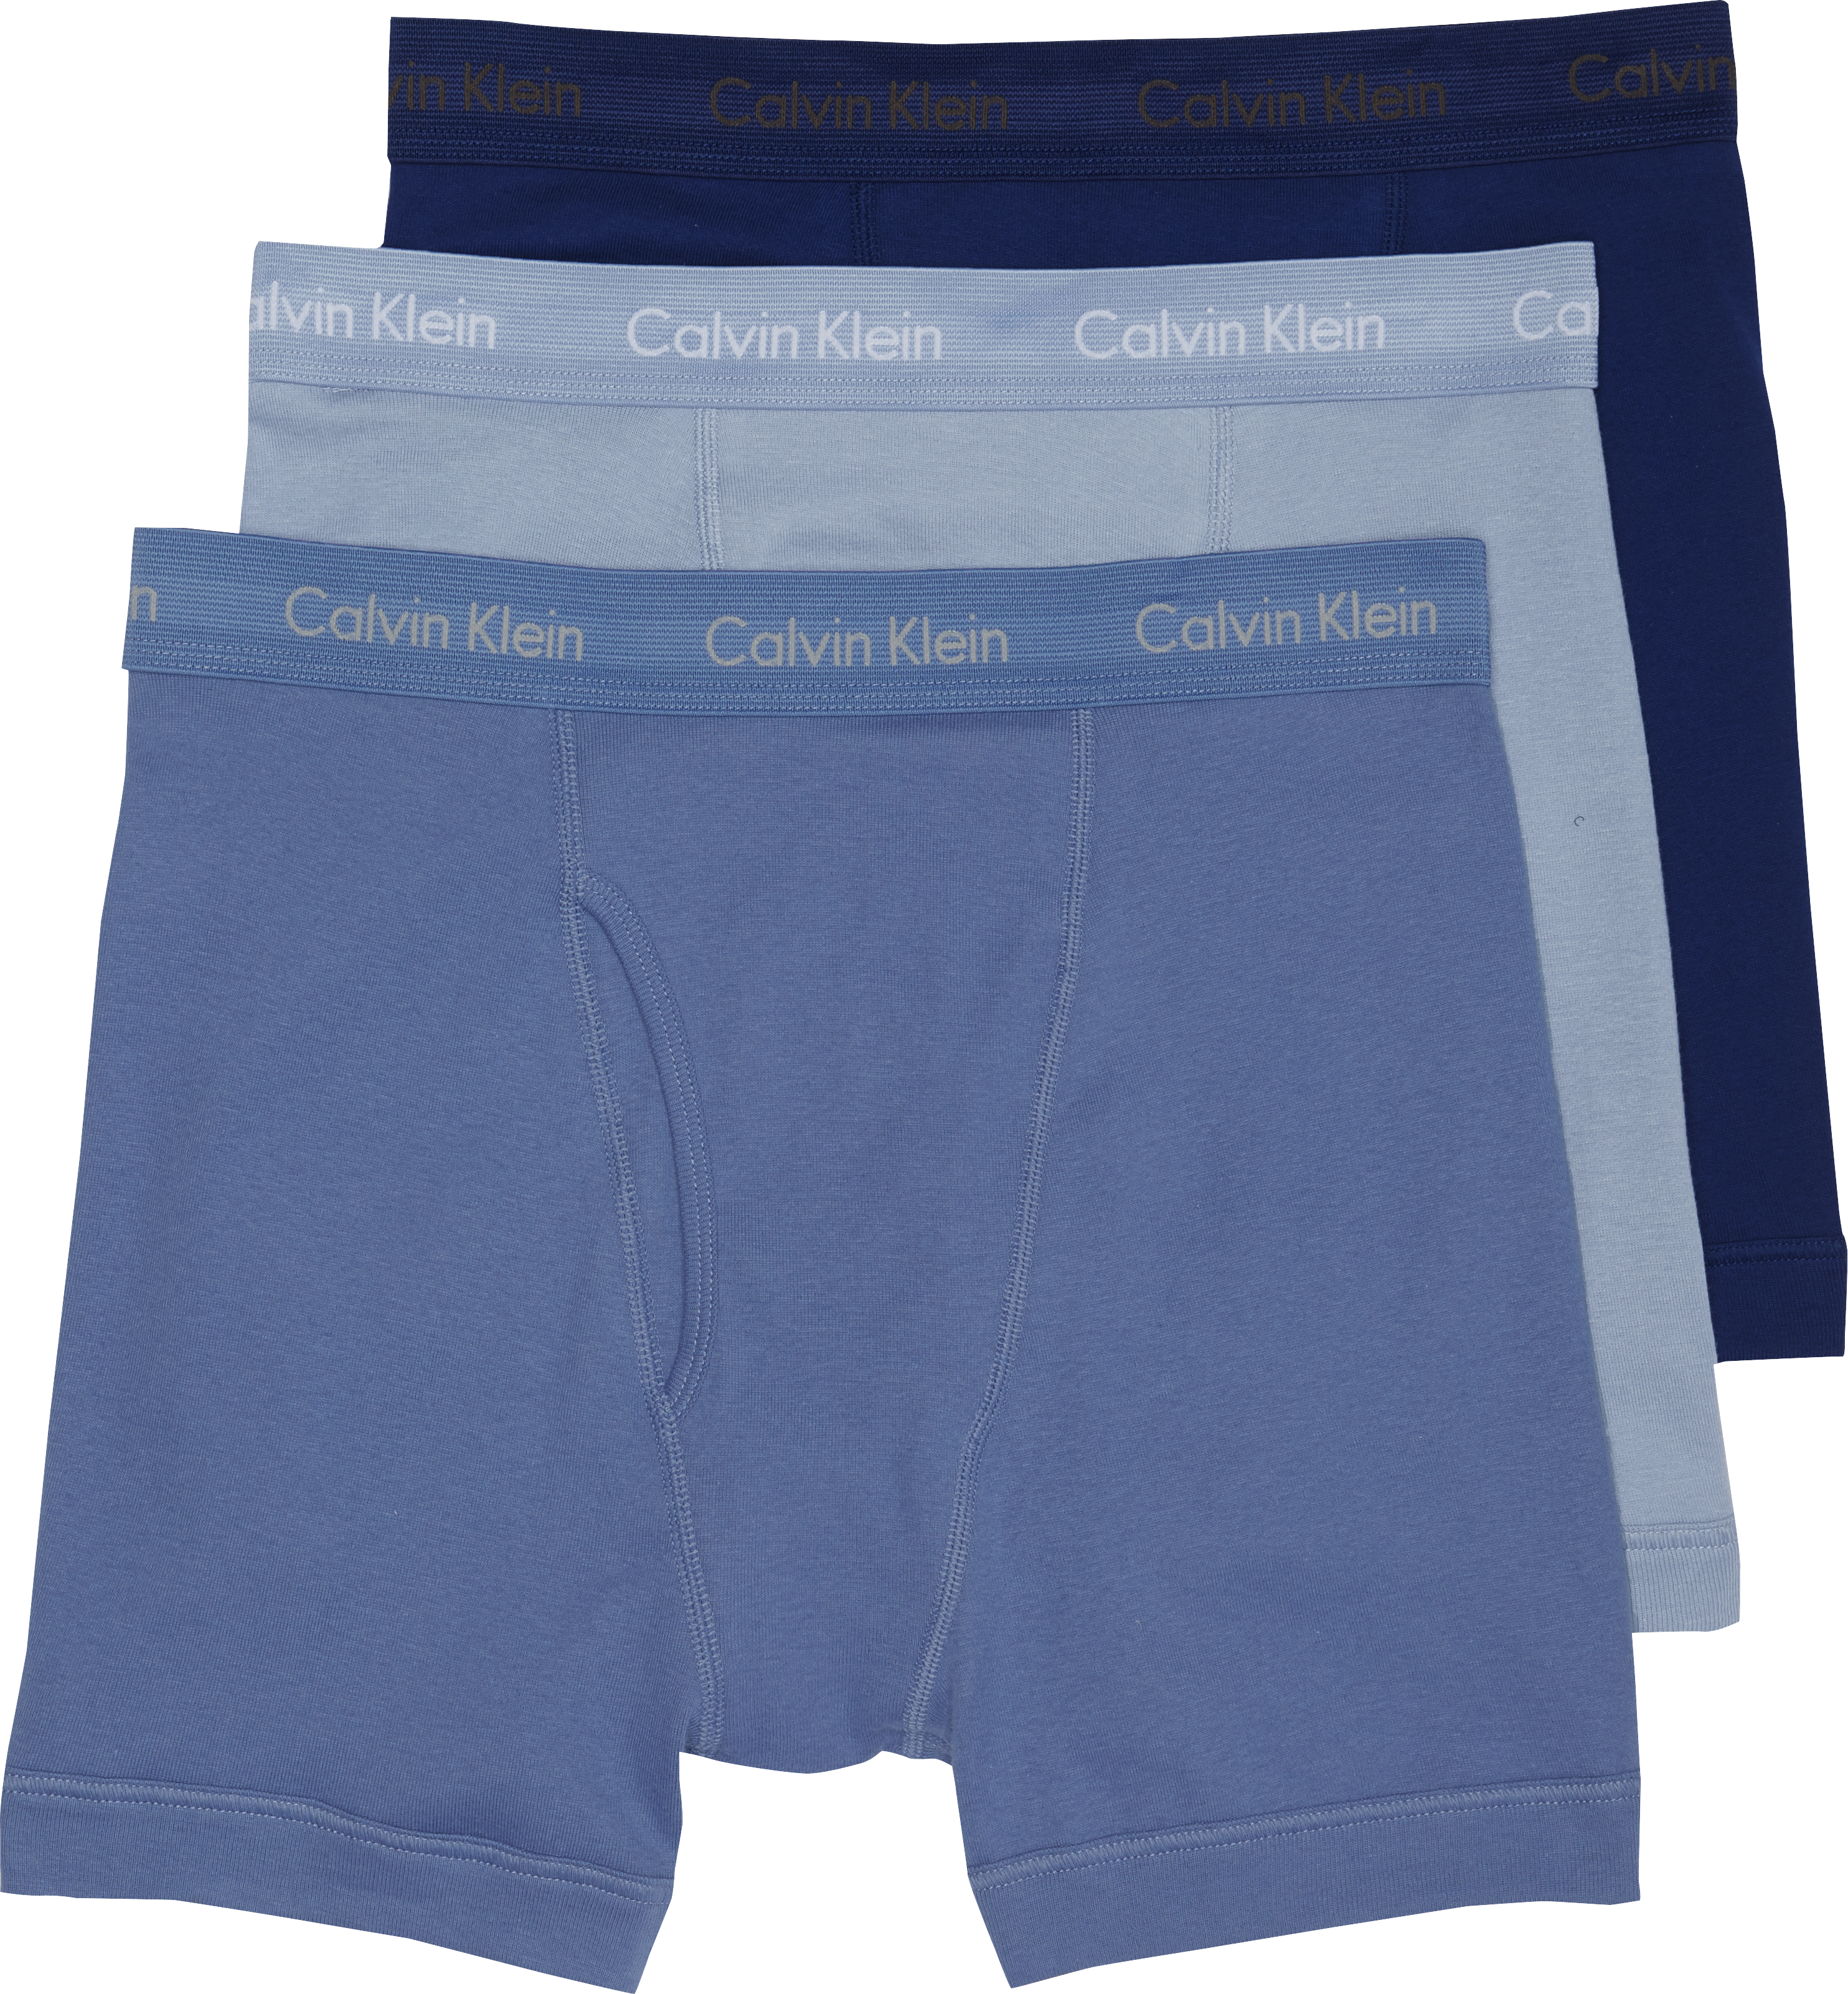 blue calvin klein boxers